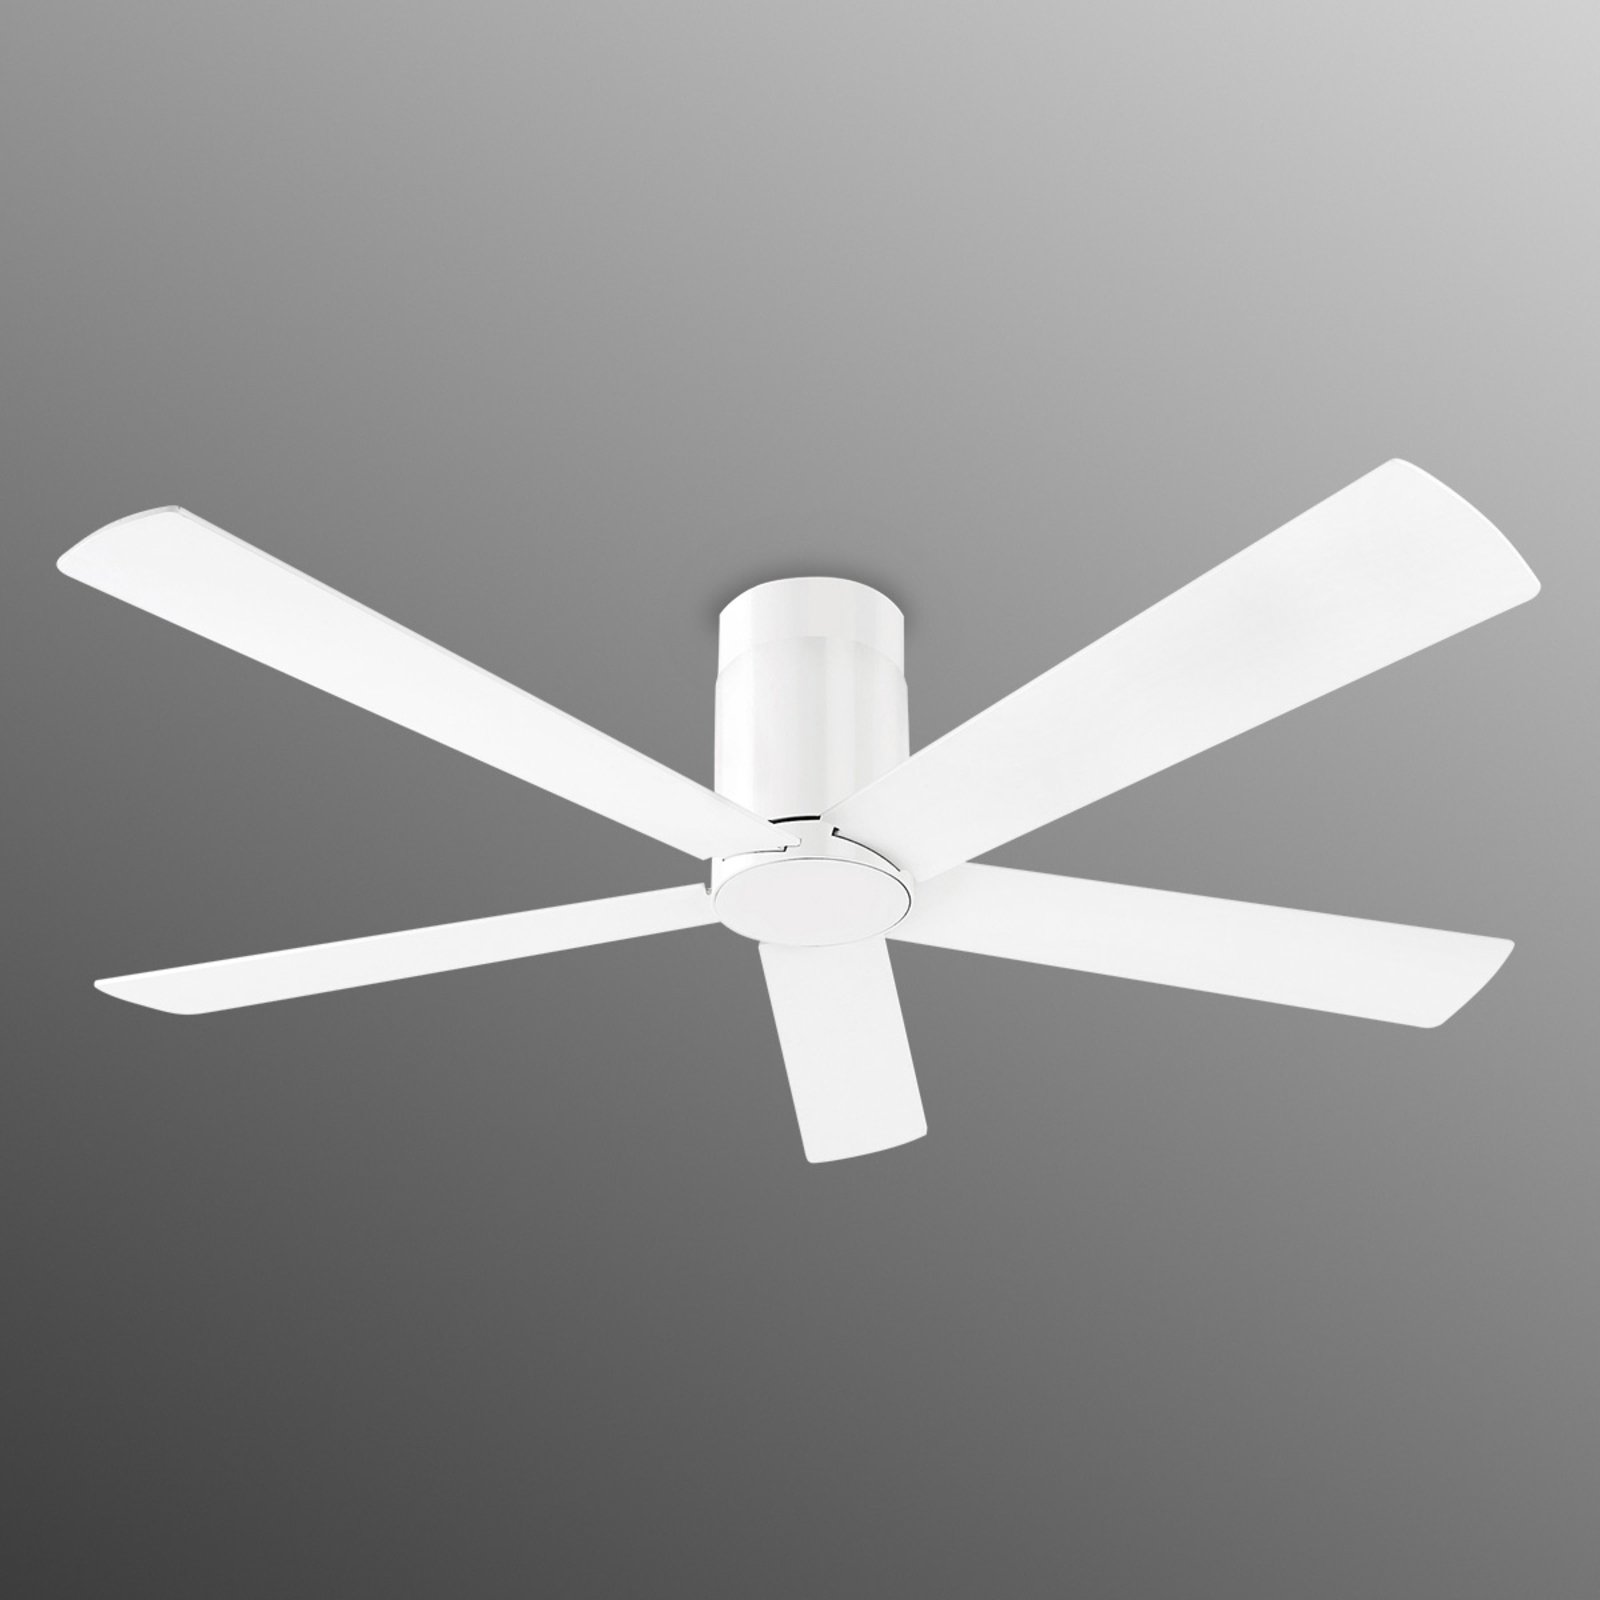 Rodas ceiling fan in a clear design - white